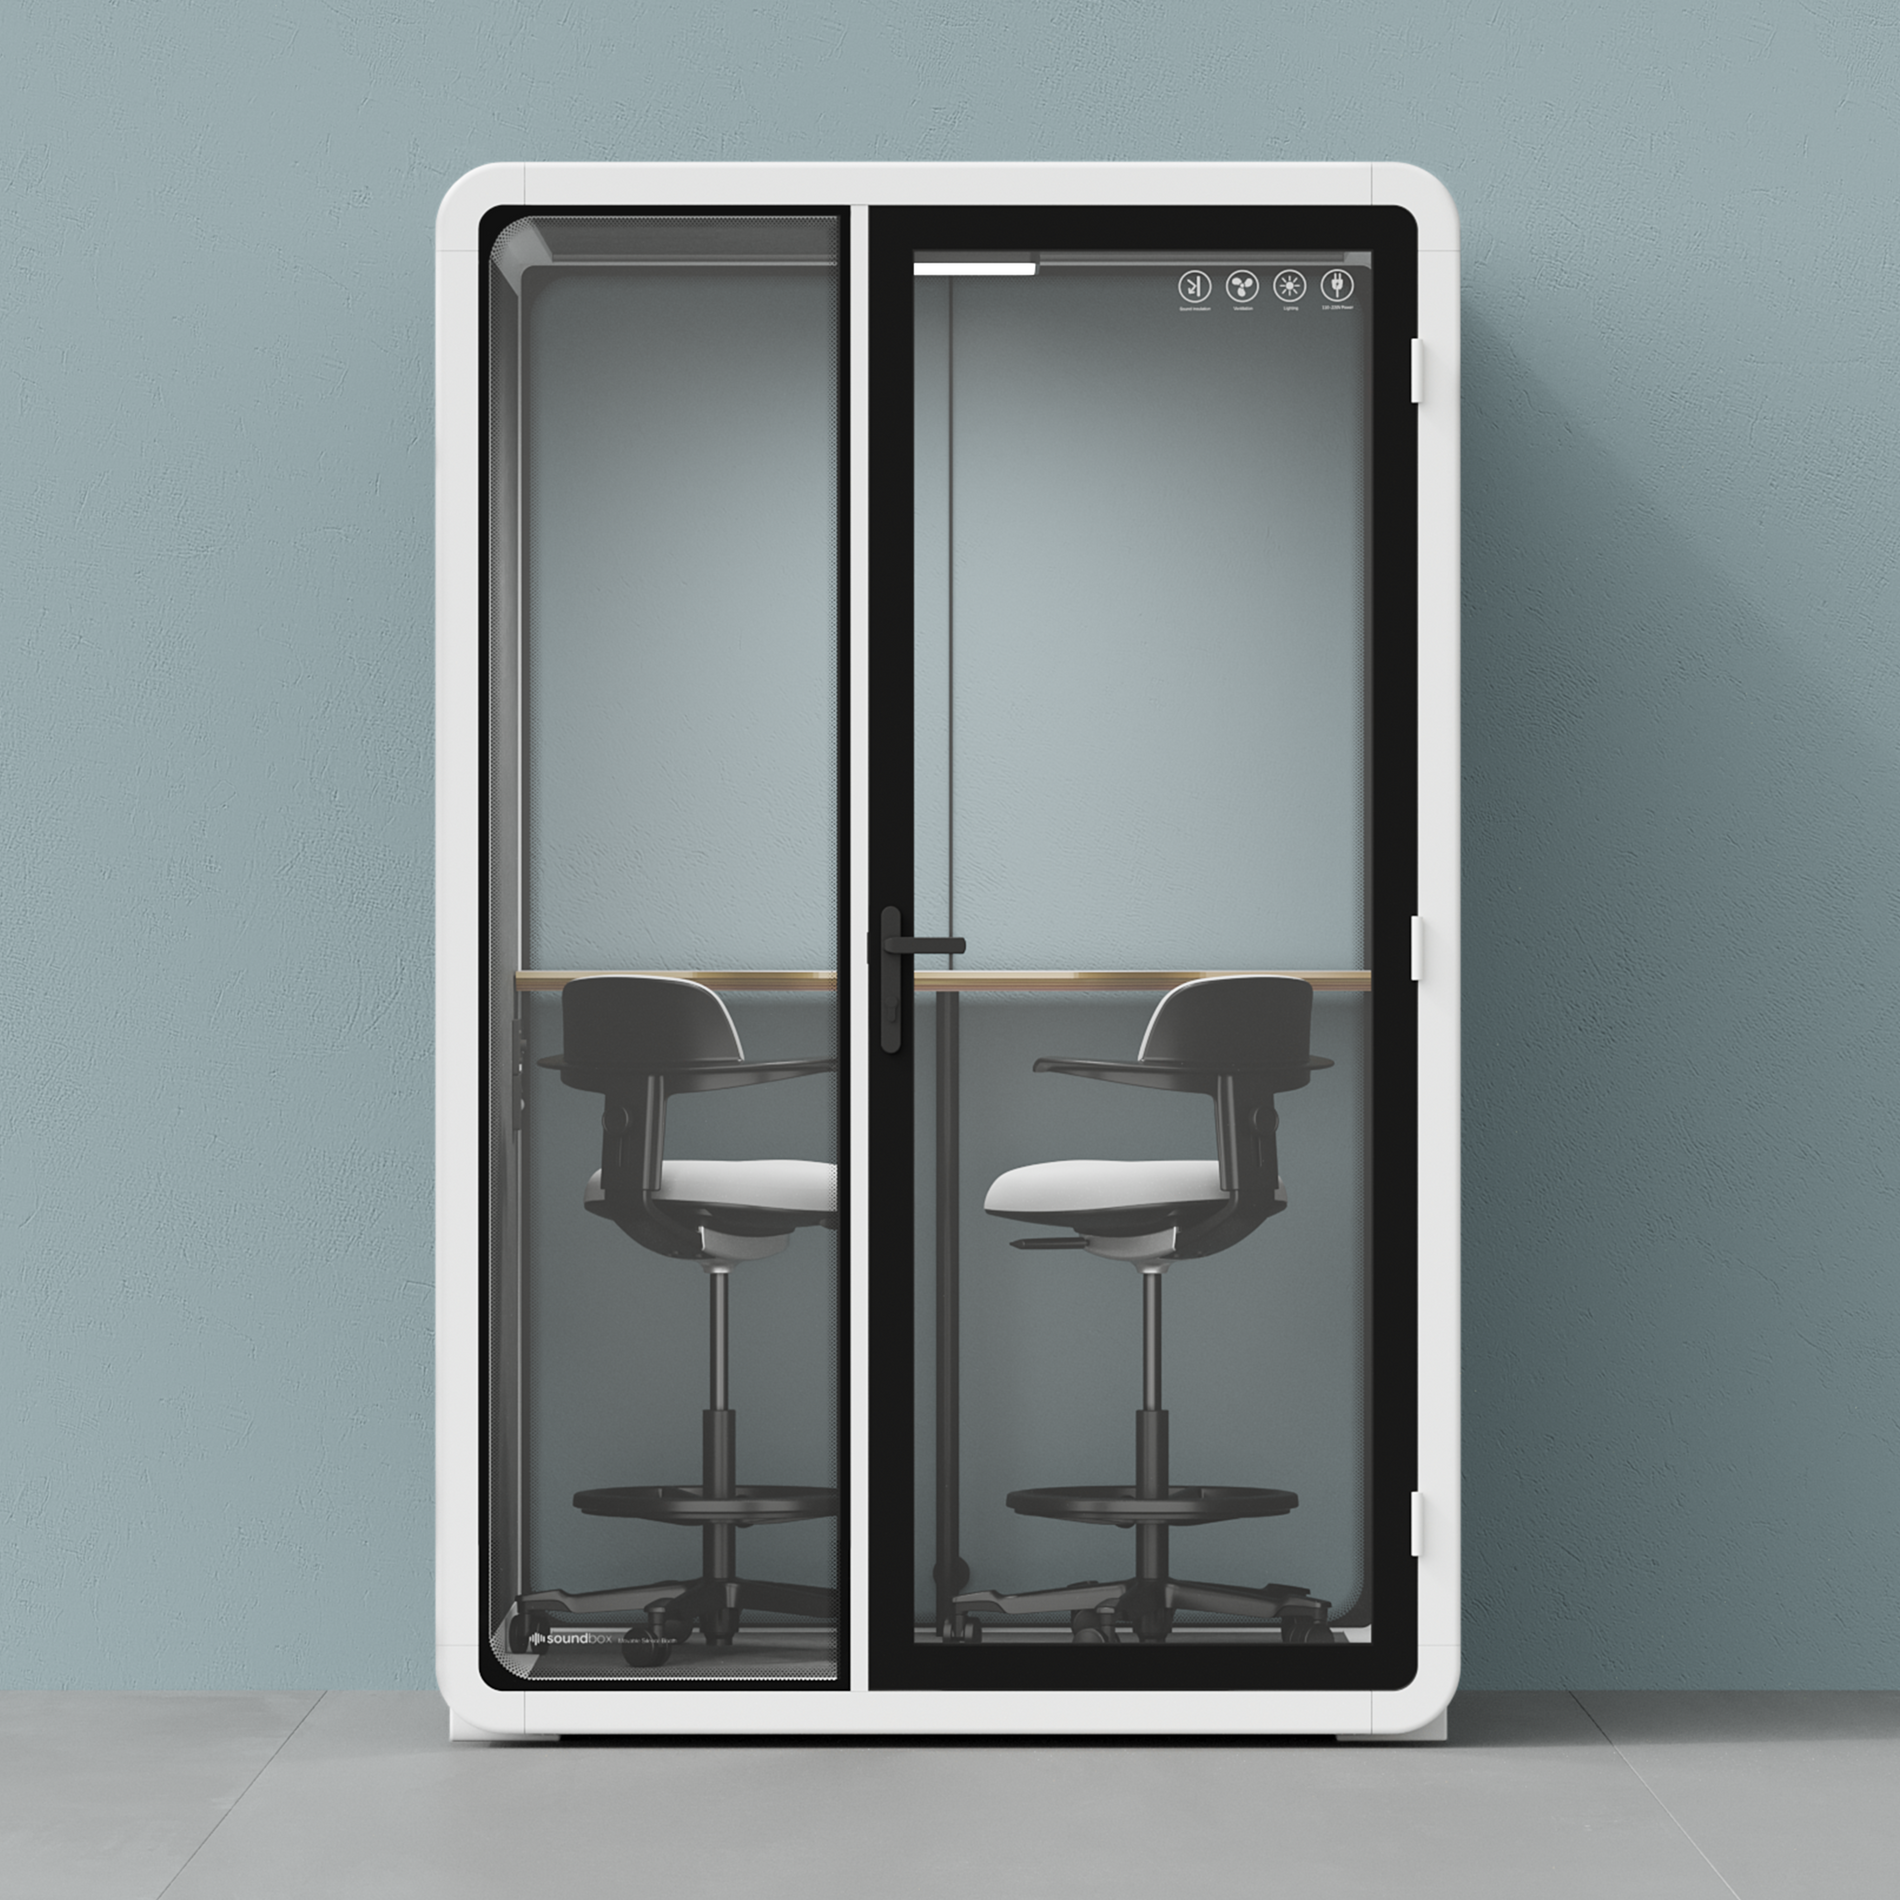 Quell - CoWorker - Pod per 2 personeWhite / Dark Gray / Dual Zoom Room + Device Shelf + 2 Barstools